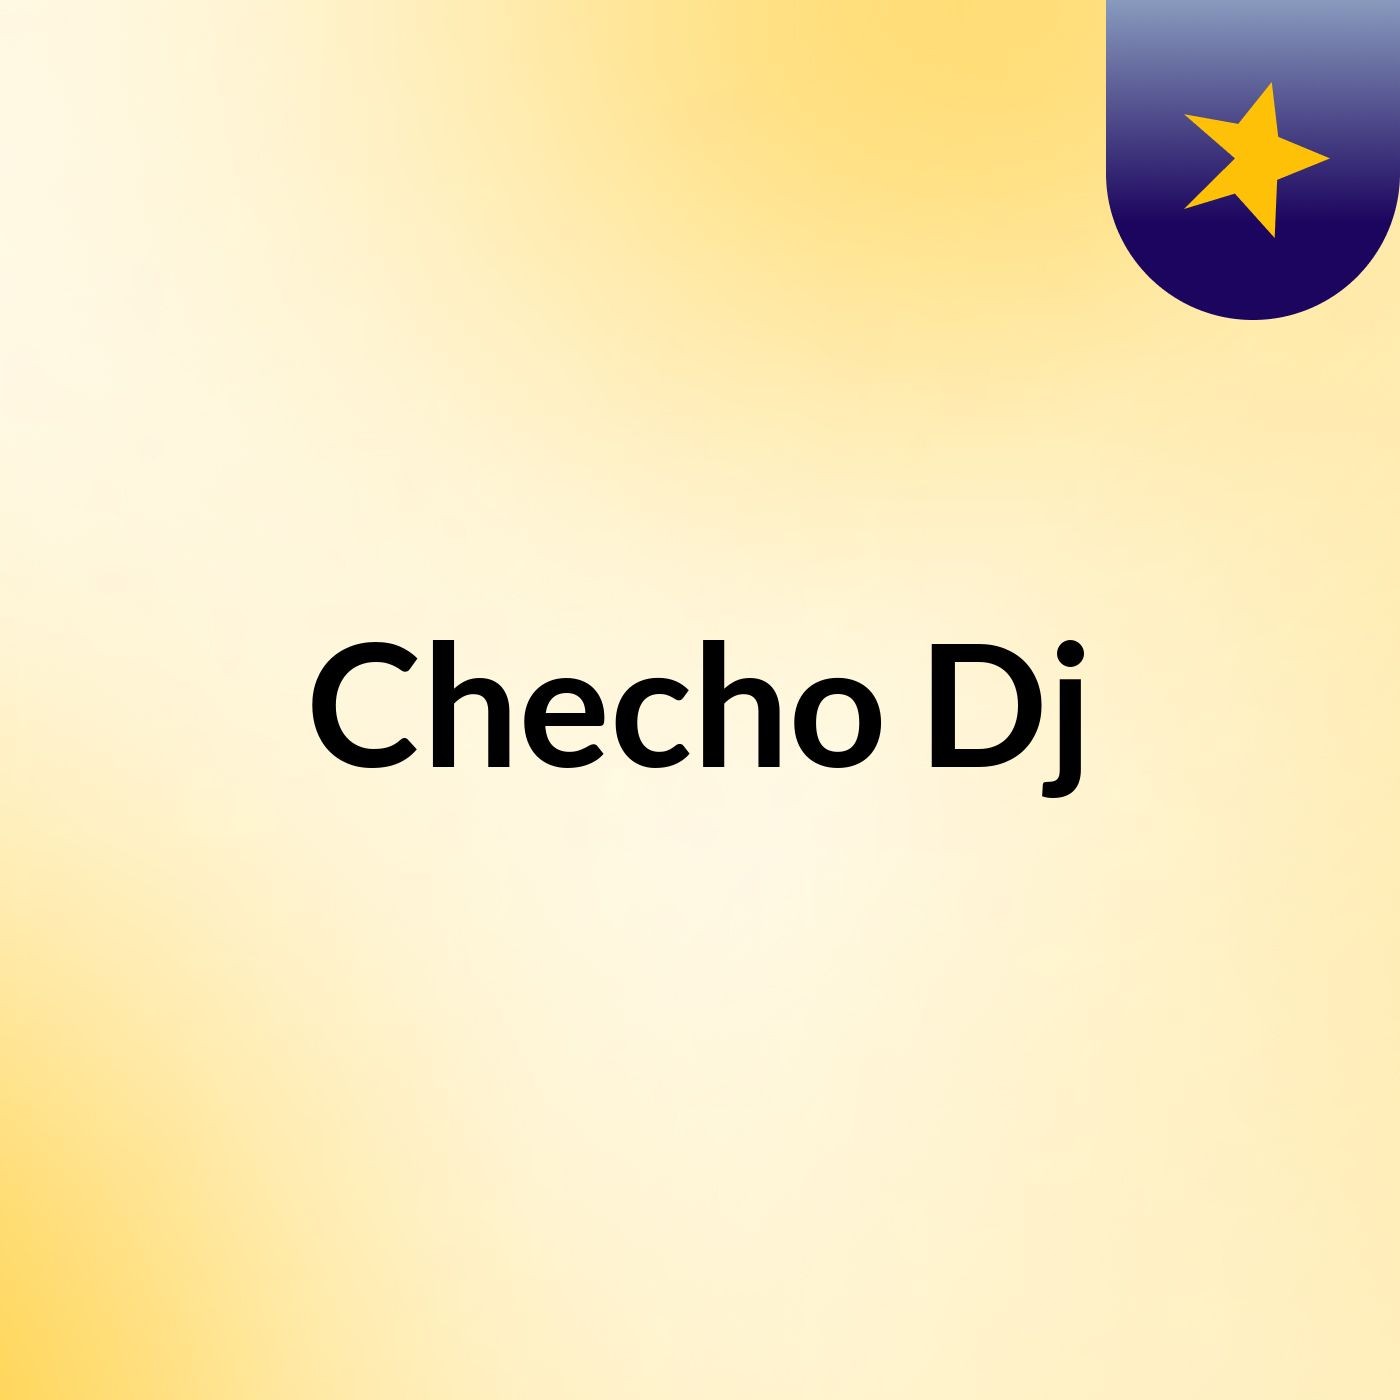 Checho Dj